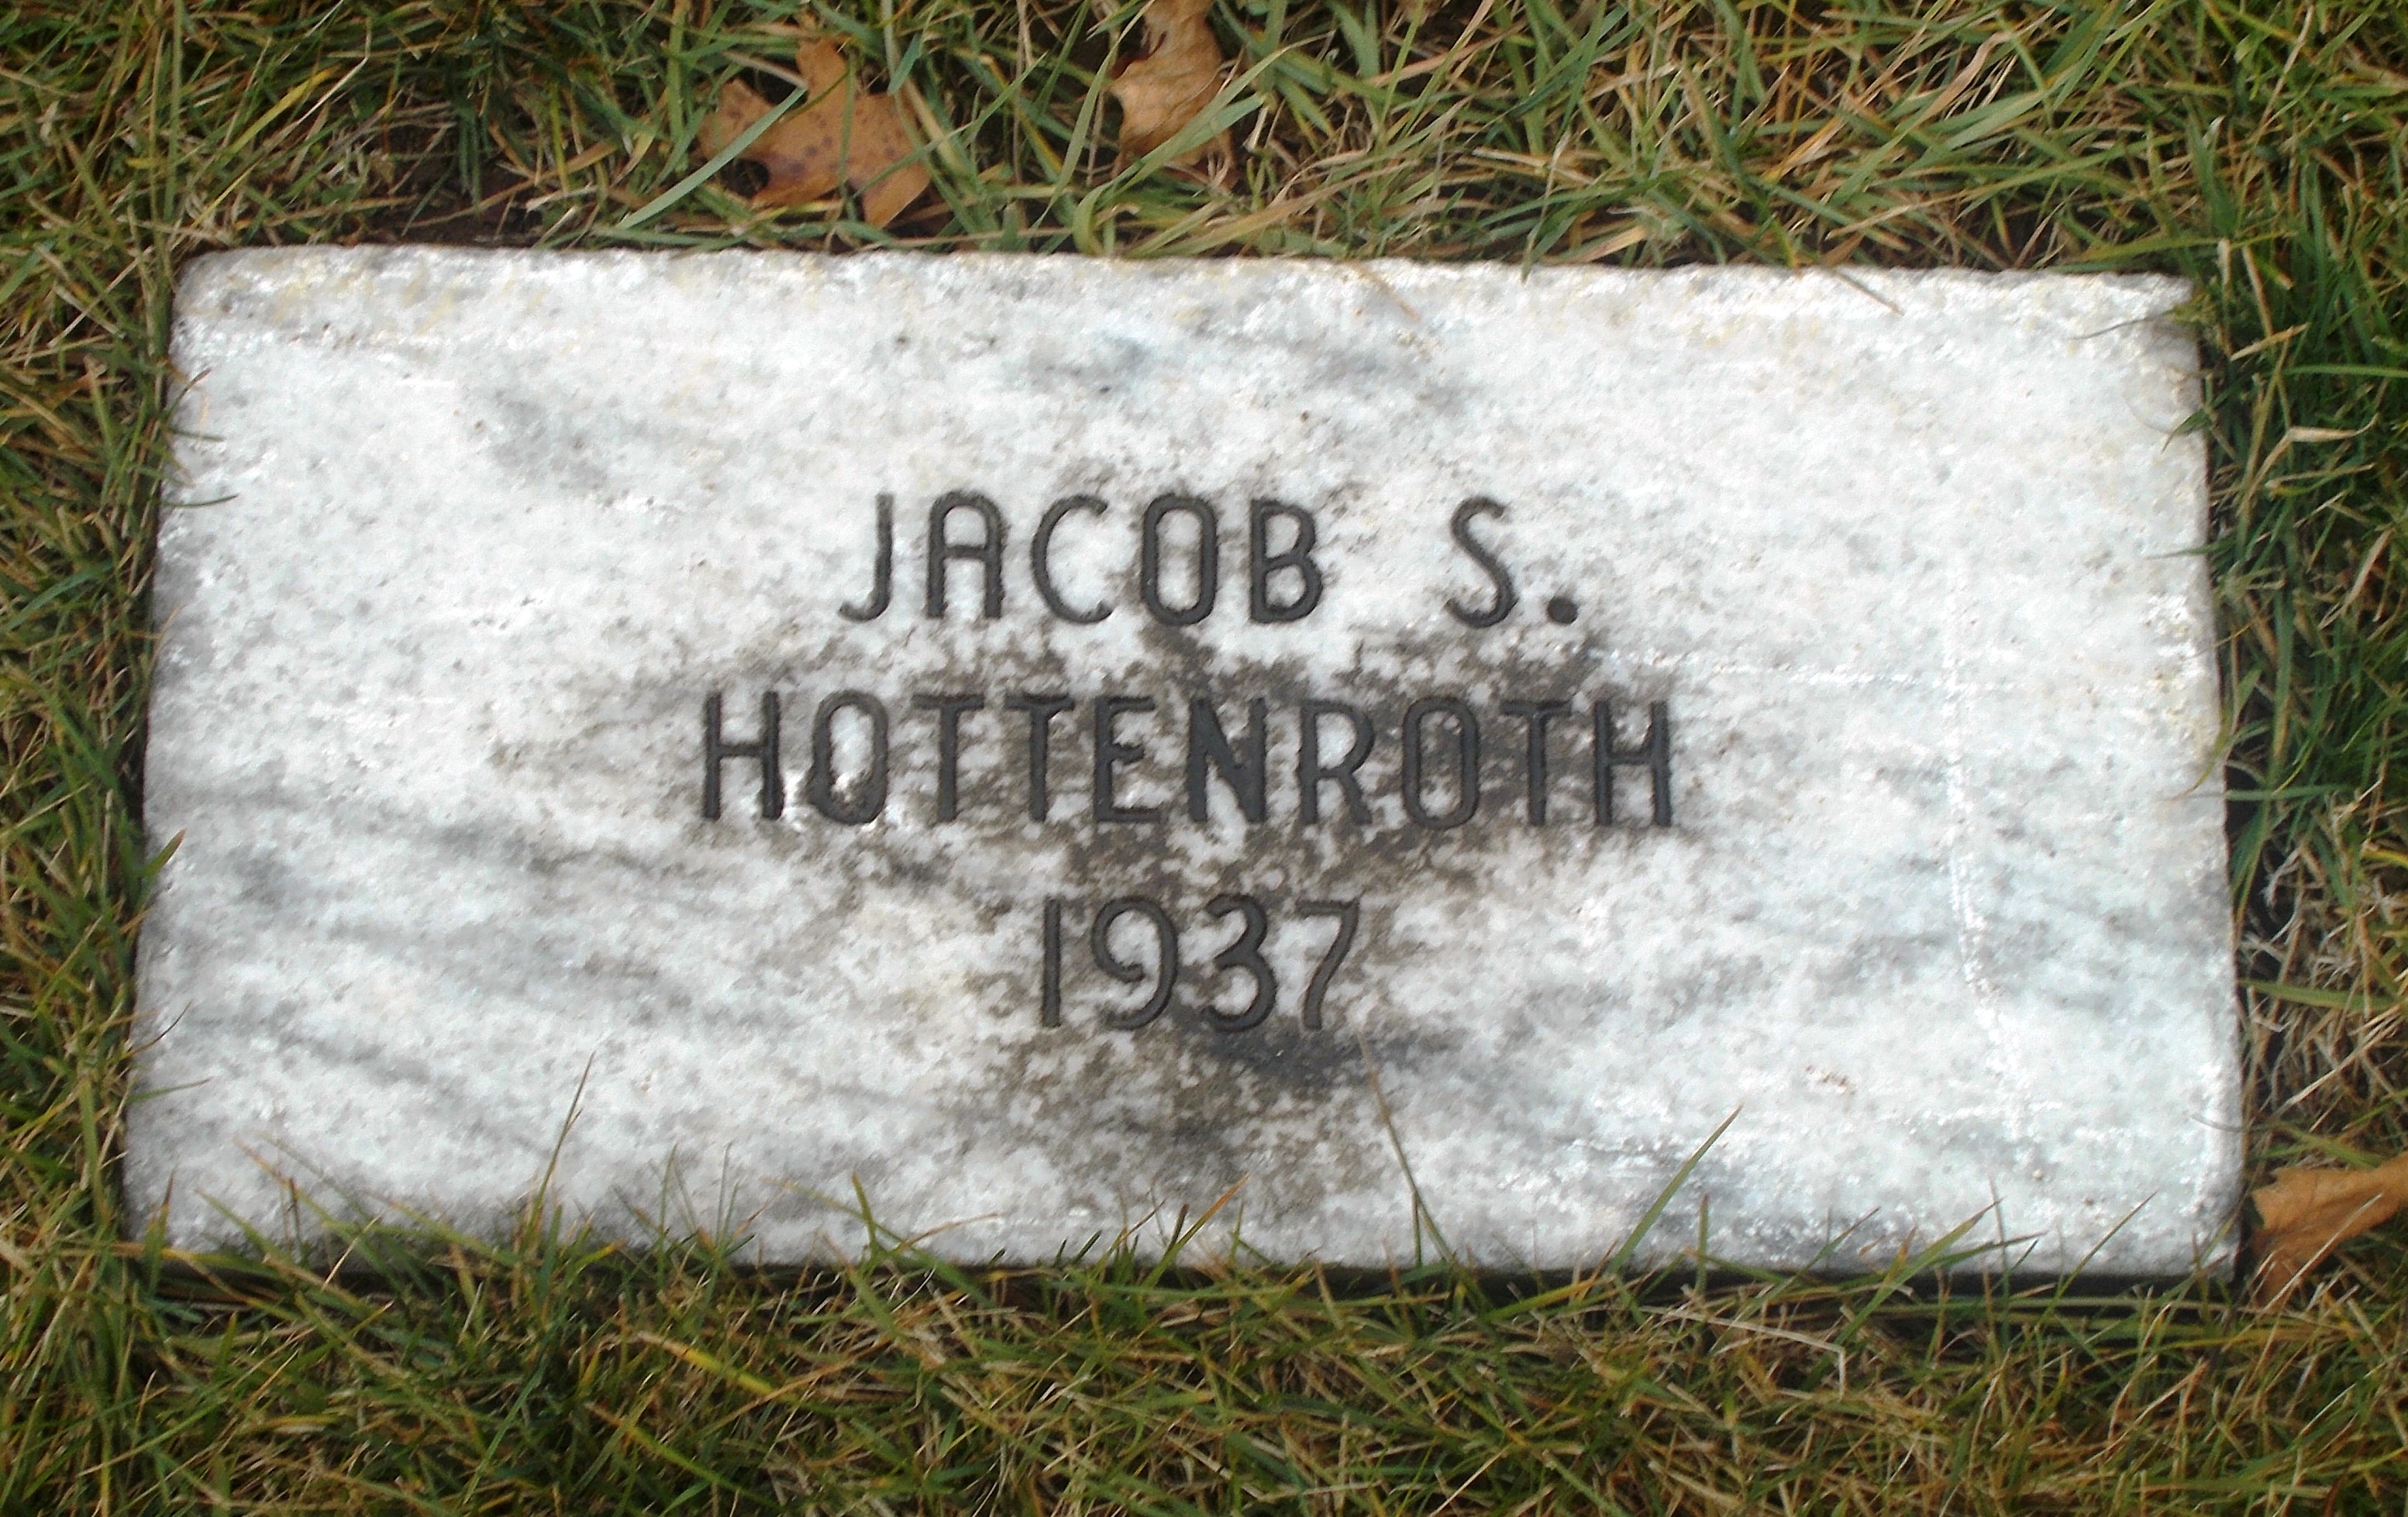 Jacob S Hottenroth